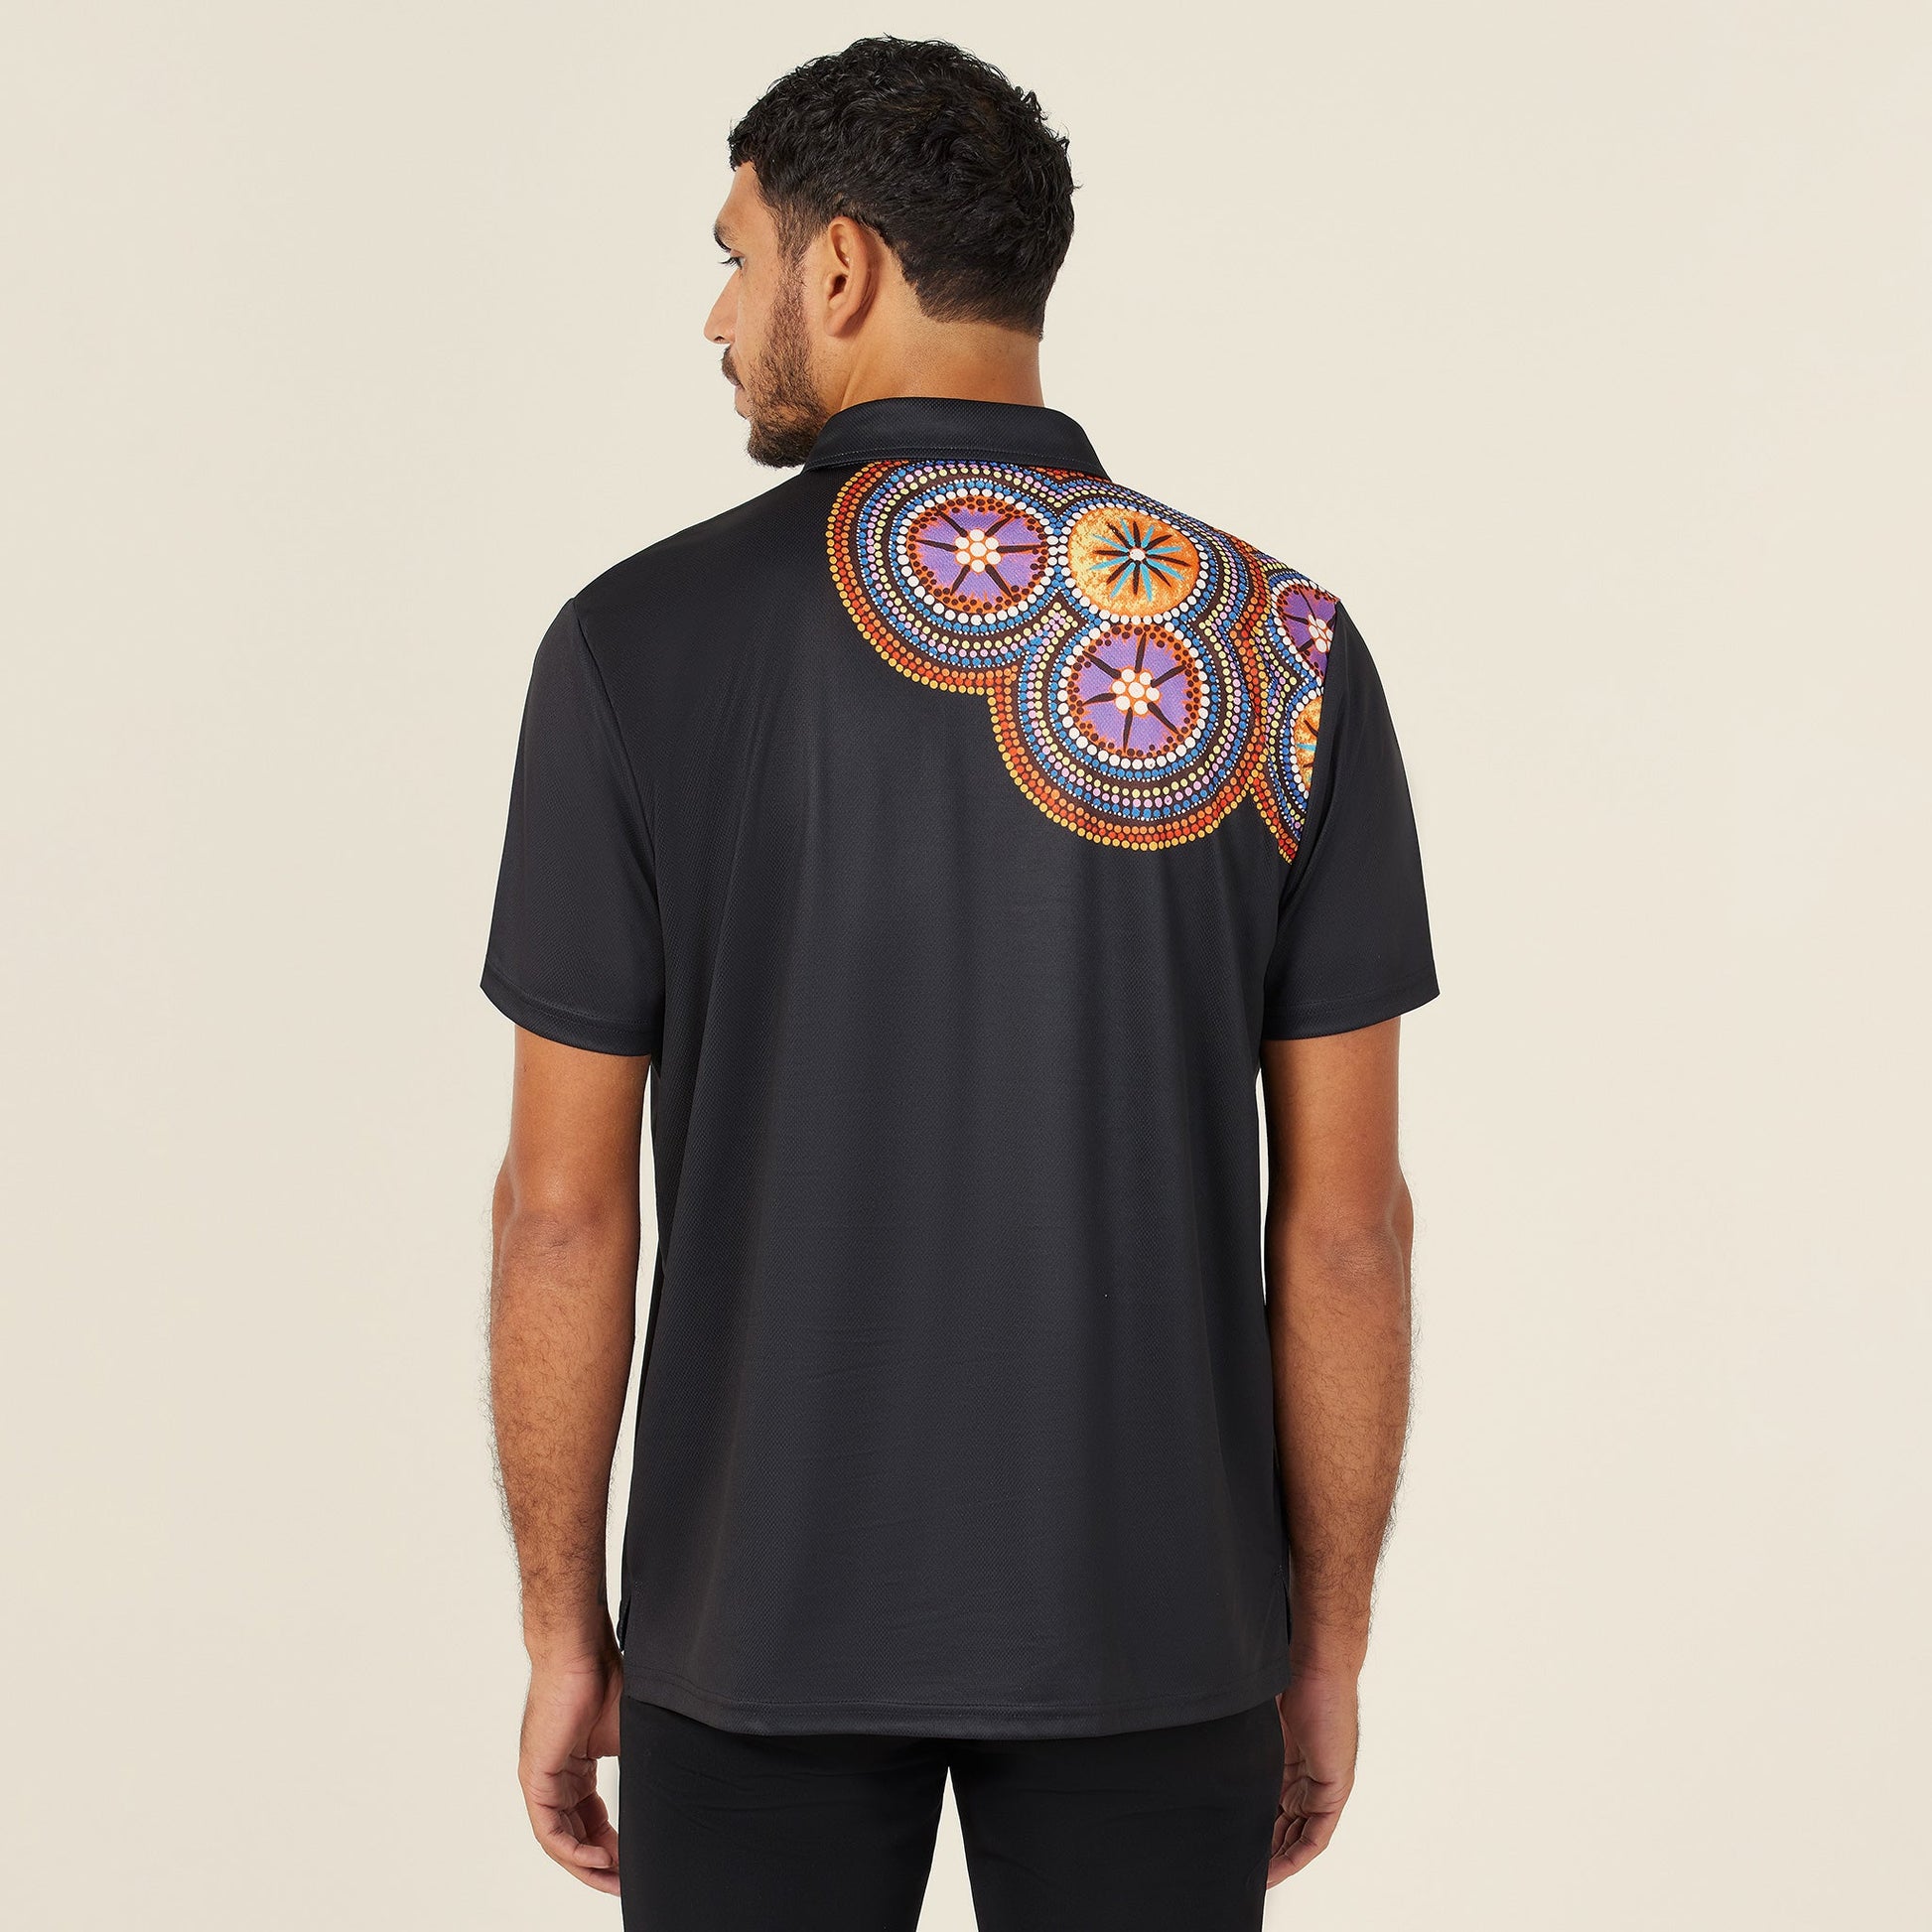 NNT Bush Tucker Men's Indigenous Corporate Polo Shirt CATJJS - Simply Scrubs Australia